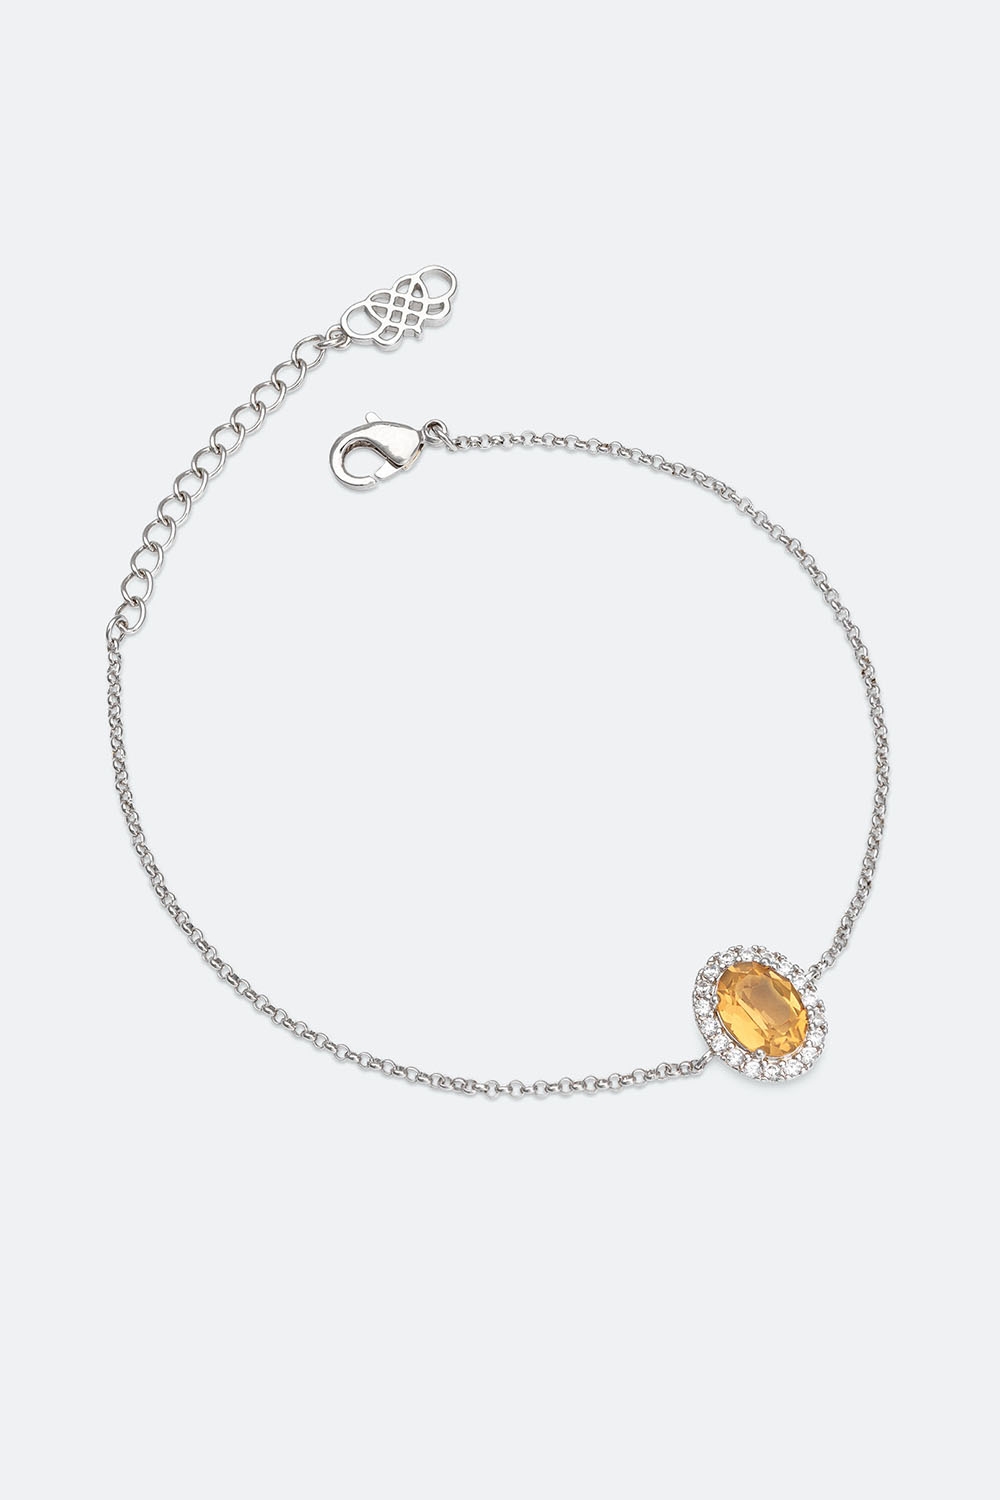 Miss Luna bracelet - Golden brown topaz ryhmässä Lily and Rose - Rannekorut @ Glitter (251000384601)